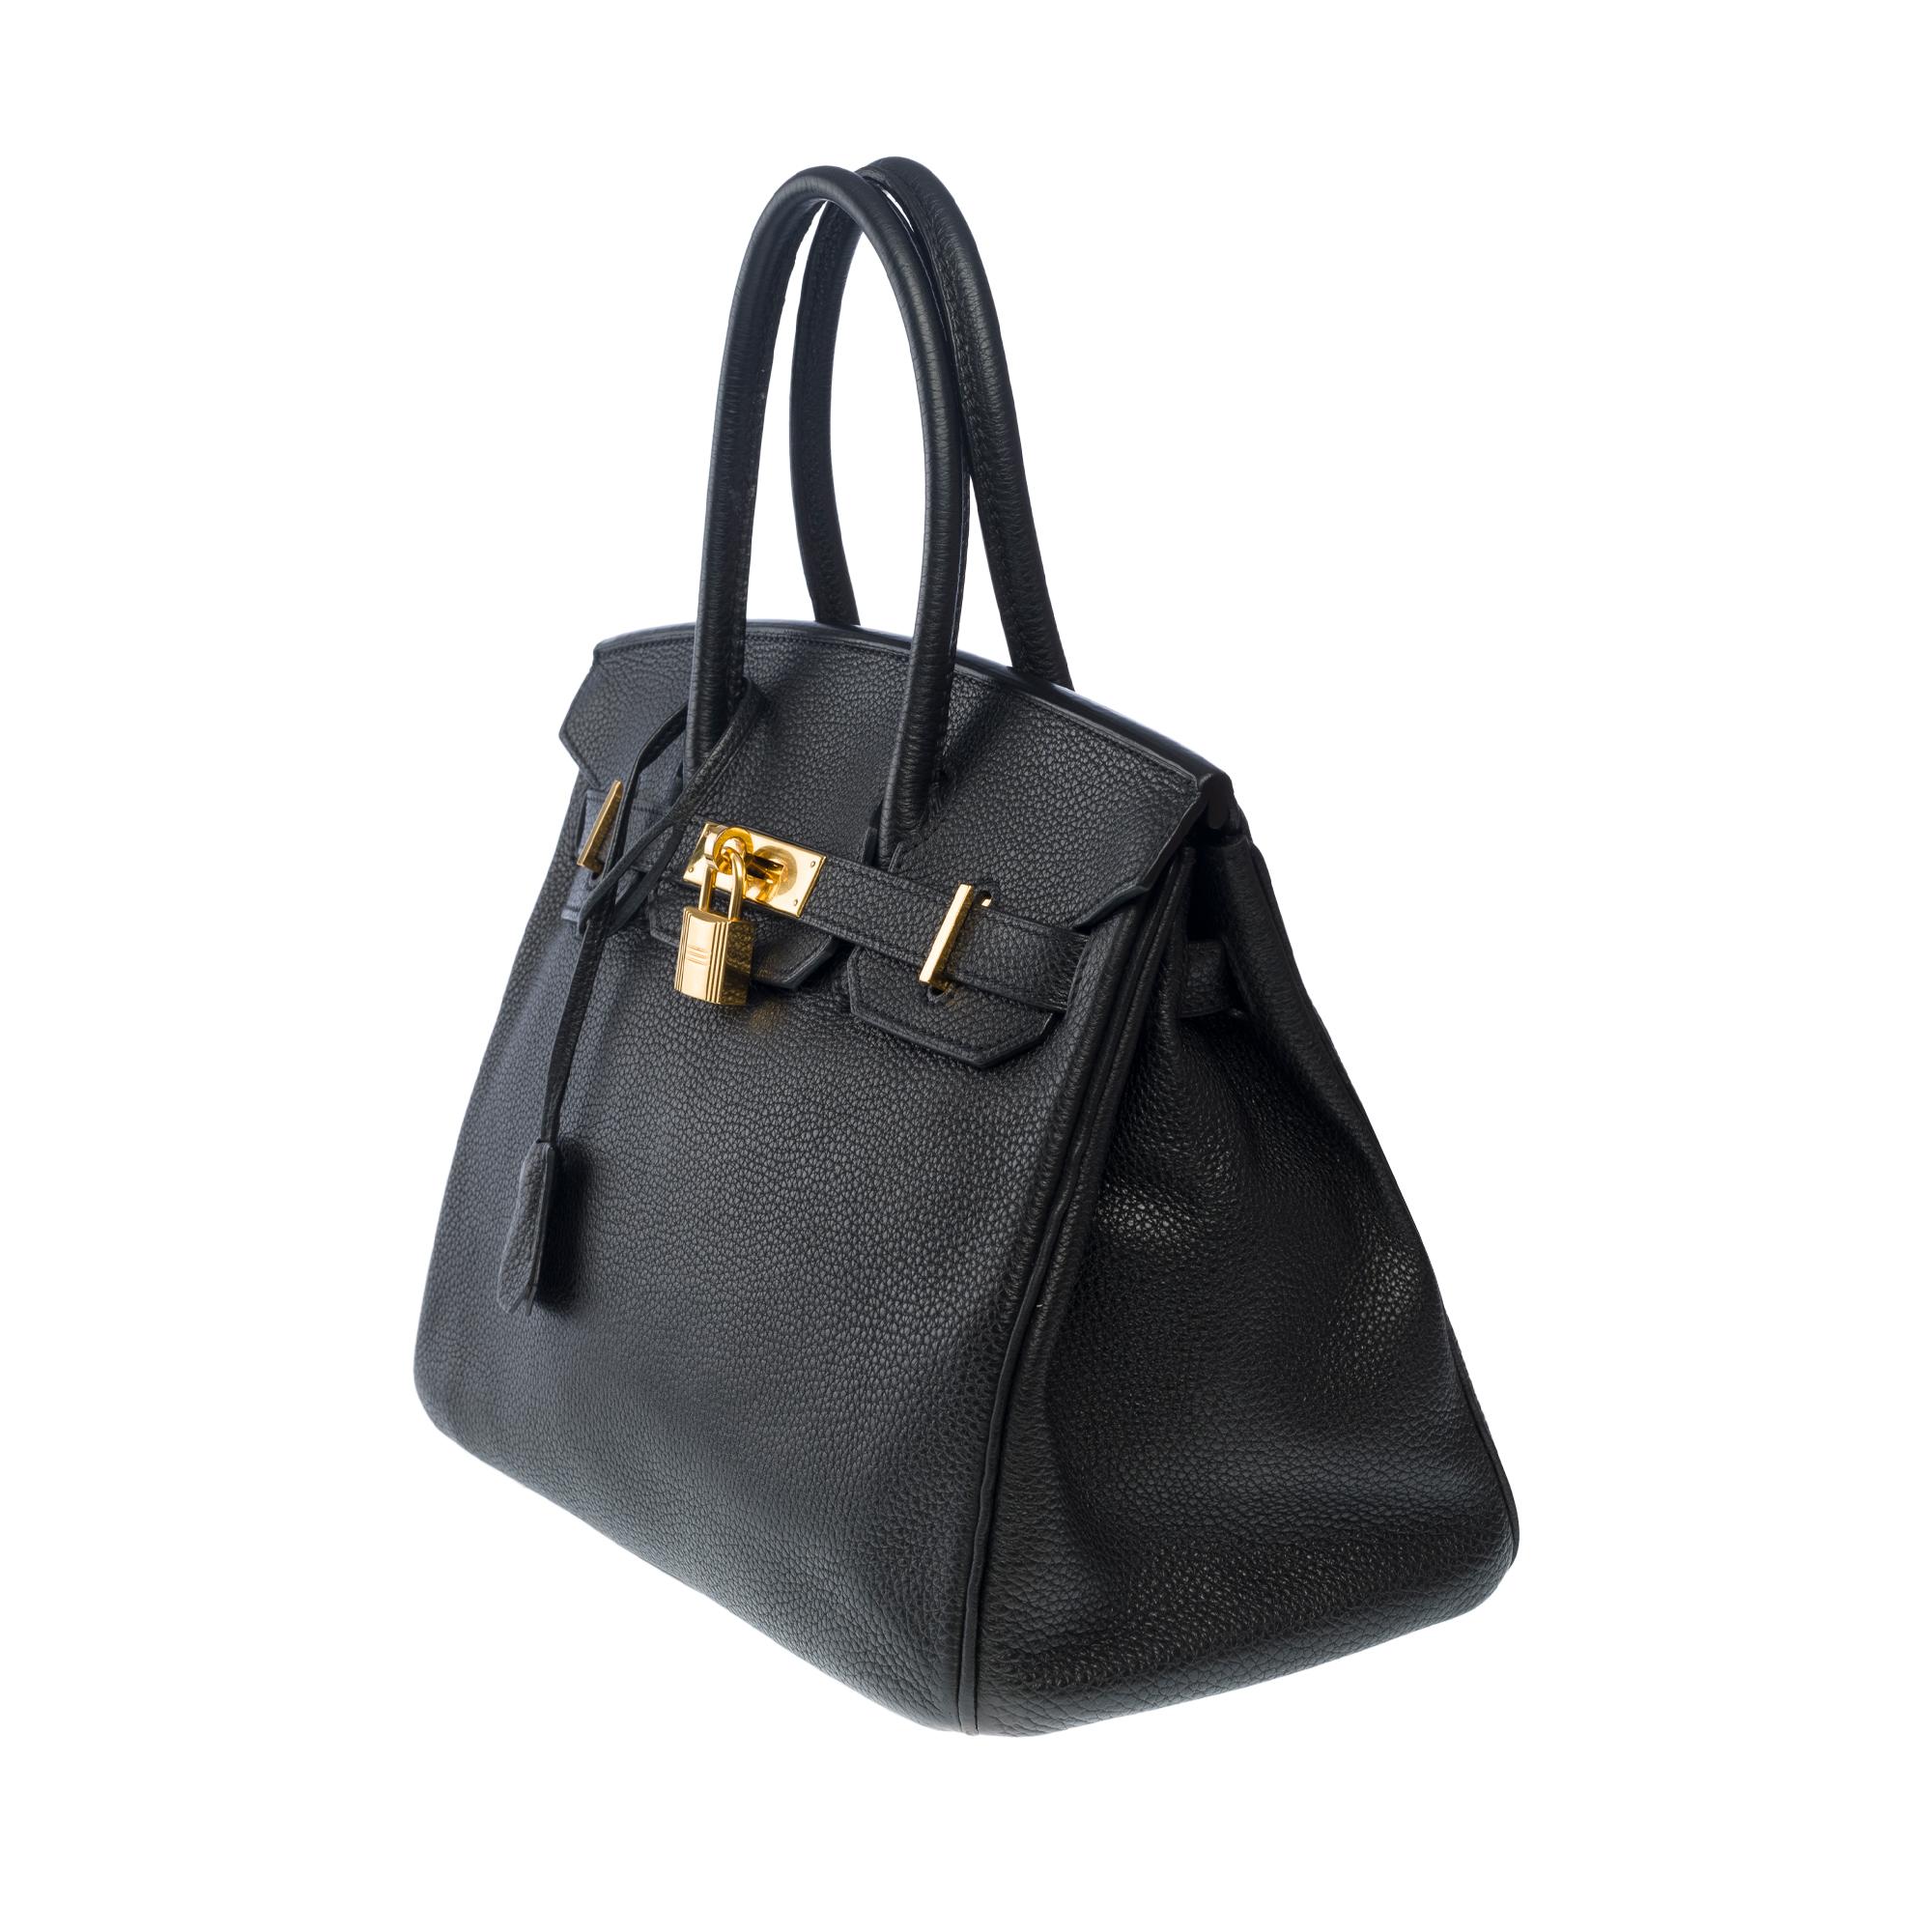 Stunning Hermes Birkin 30 handbag in Black Togo leather, GHW 2